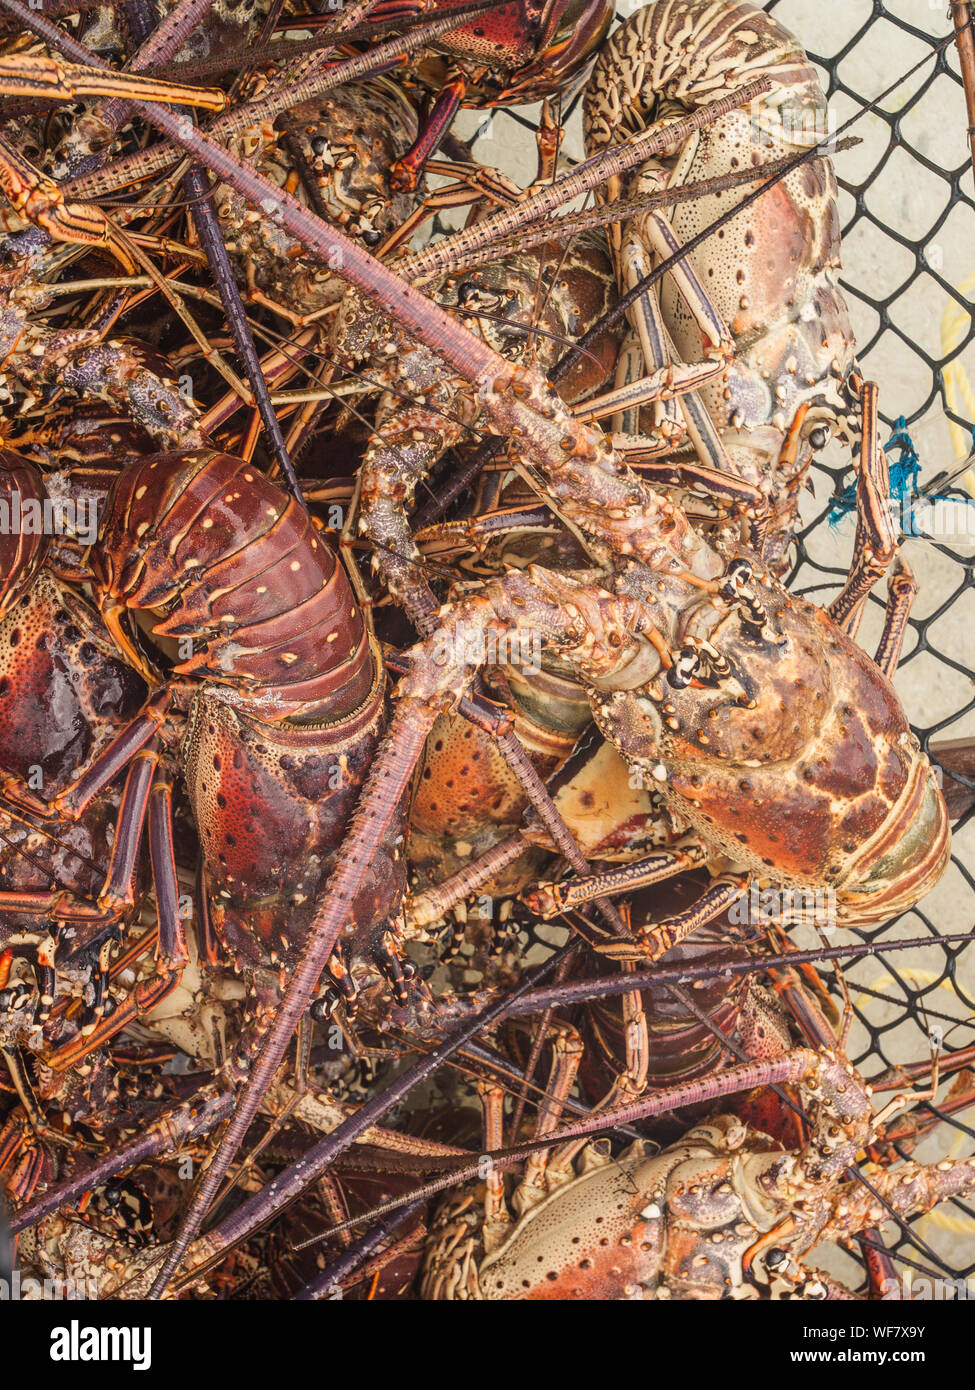 Arthropod Caribbean Caribbean Sea, Spiny Lobster, Close-Up, - , Seafood market, Panulirus argus, Photography, Traps -Shopping Stock Photo